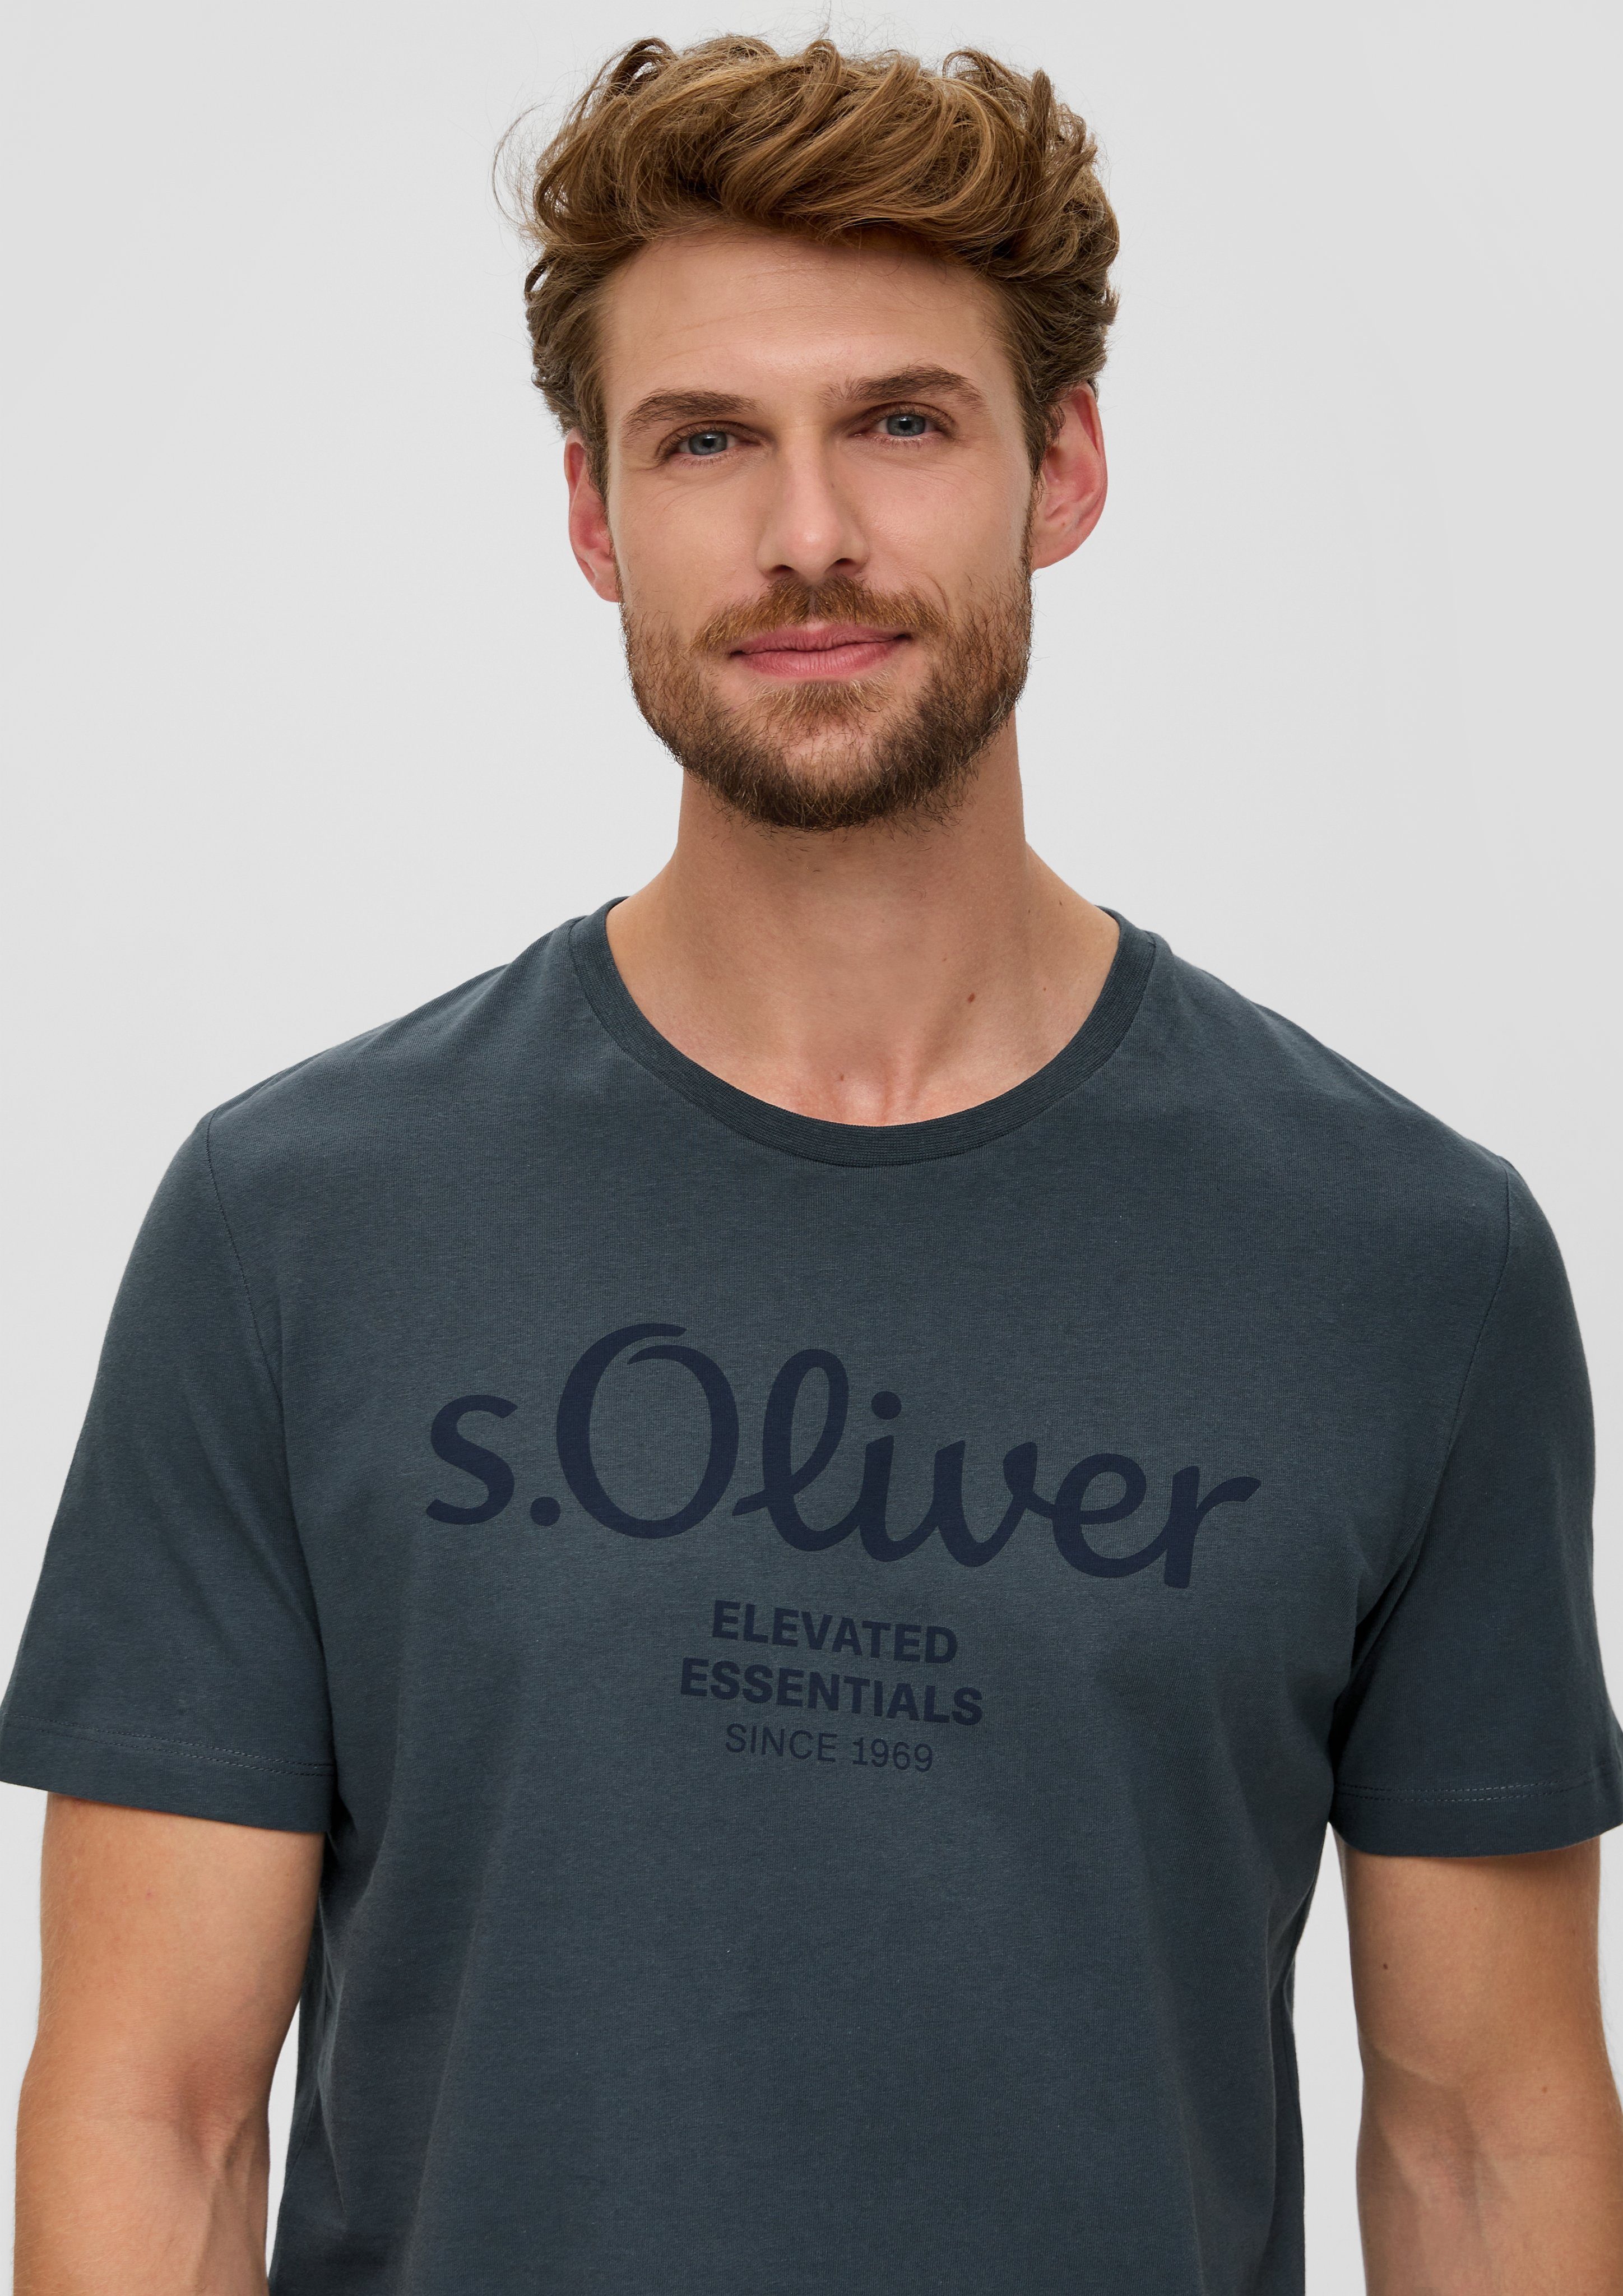 sportiven dark Look im grey s.Oliver T-Shirt